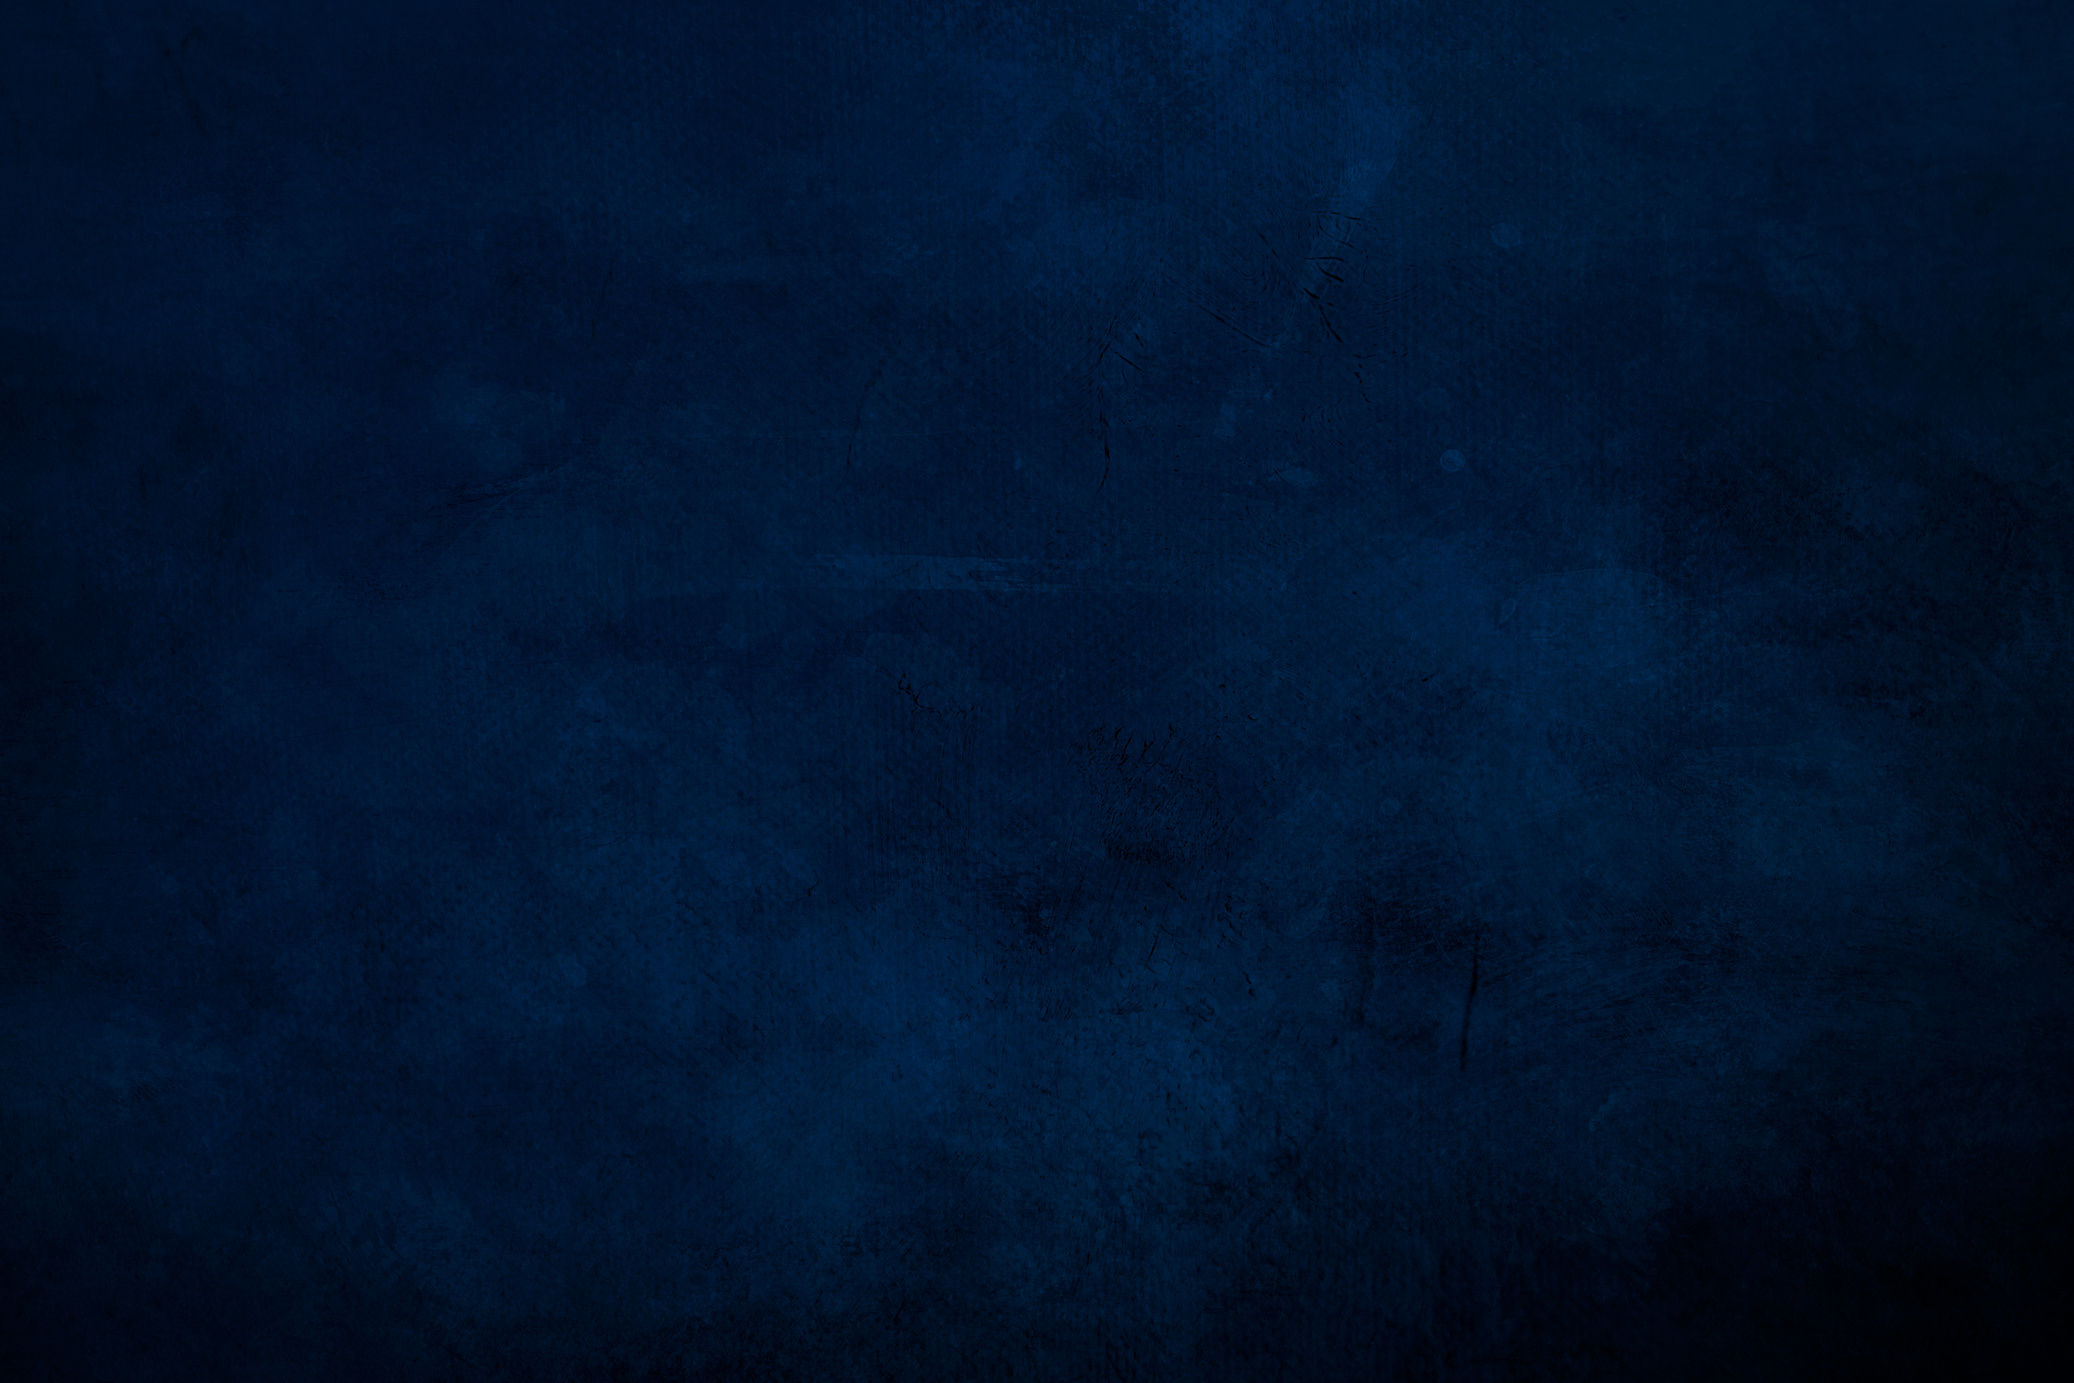 DArk blue  grungy canvas background or texture with dark vignette borders